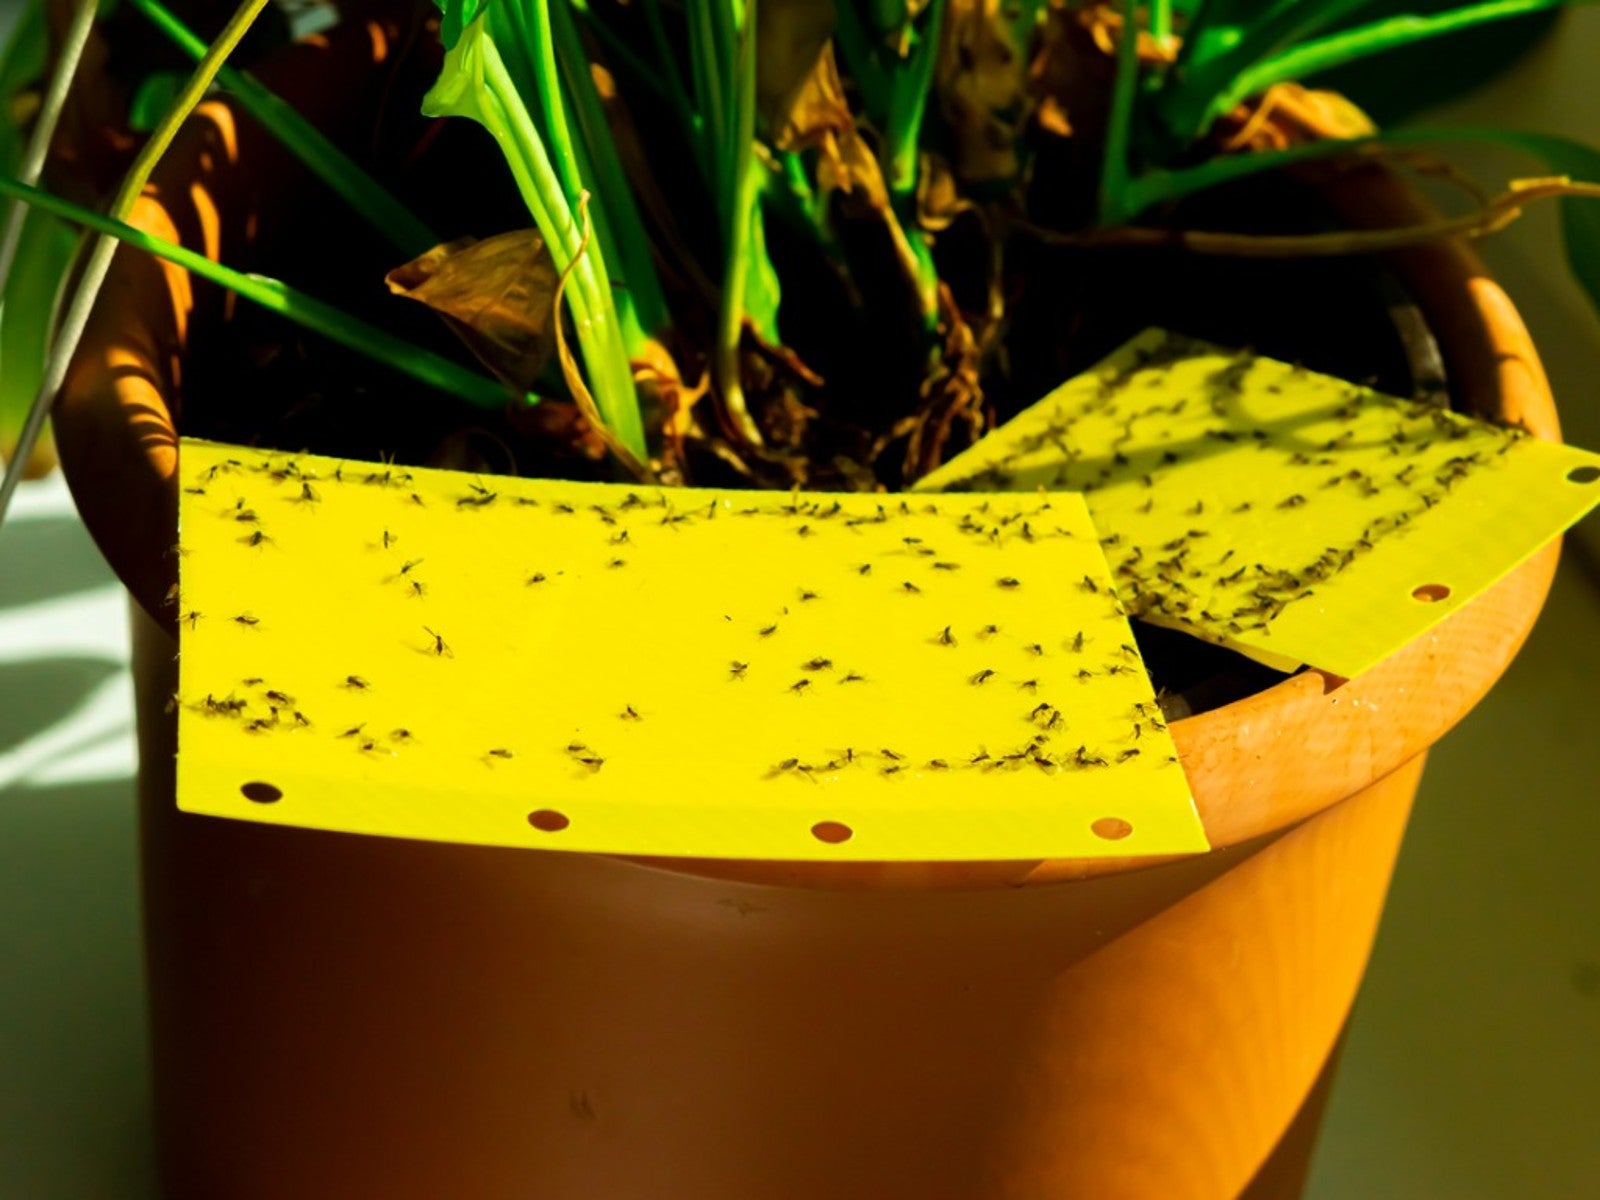 How to Get Rid of Gnats - DIY Gnat Traps